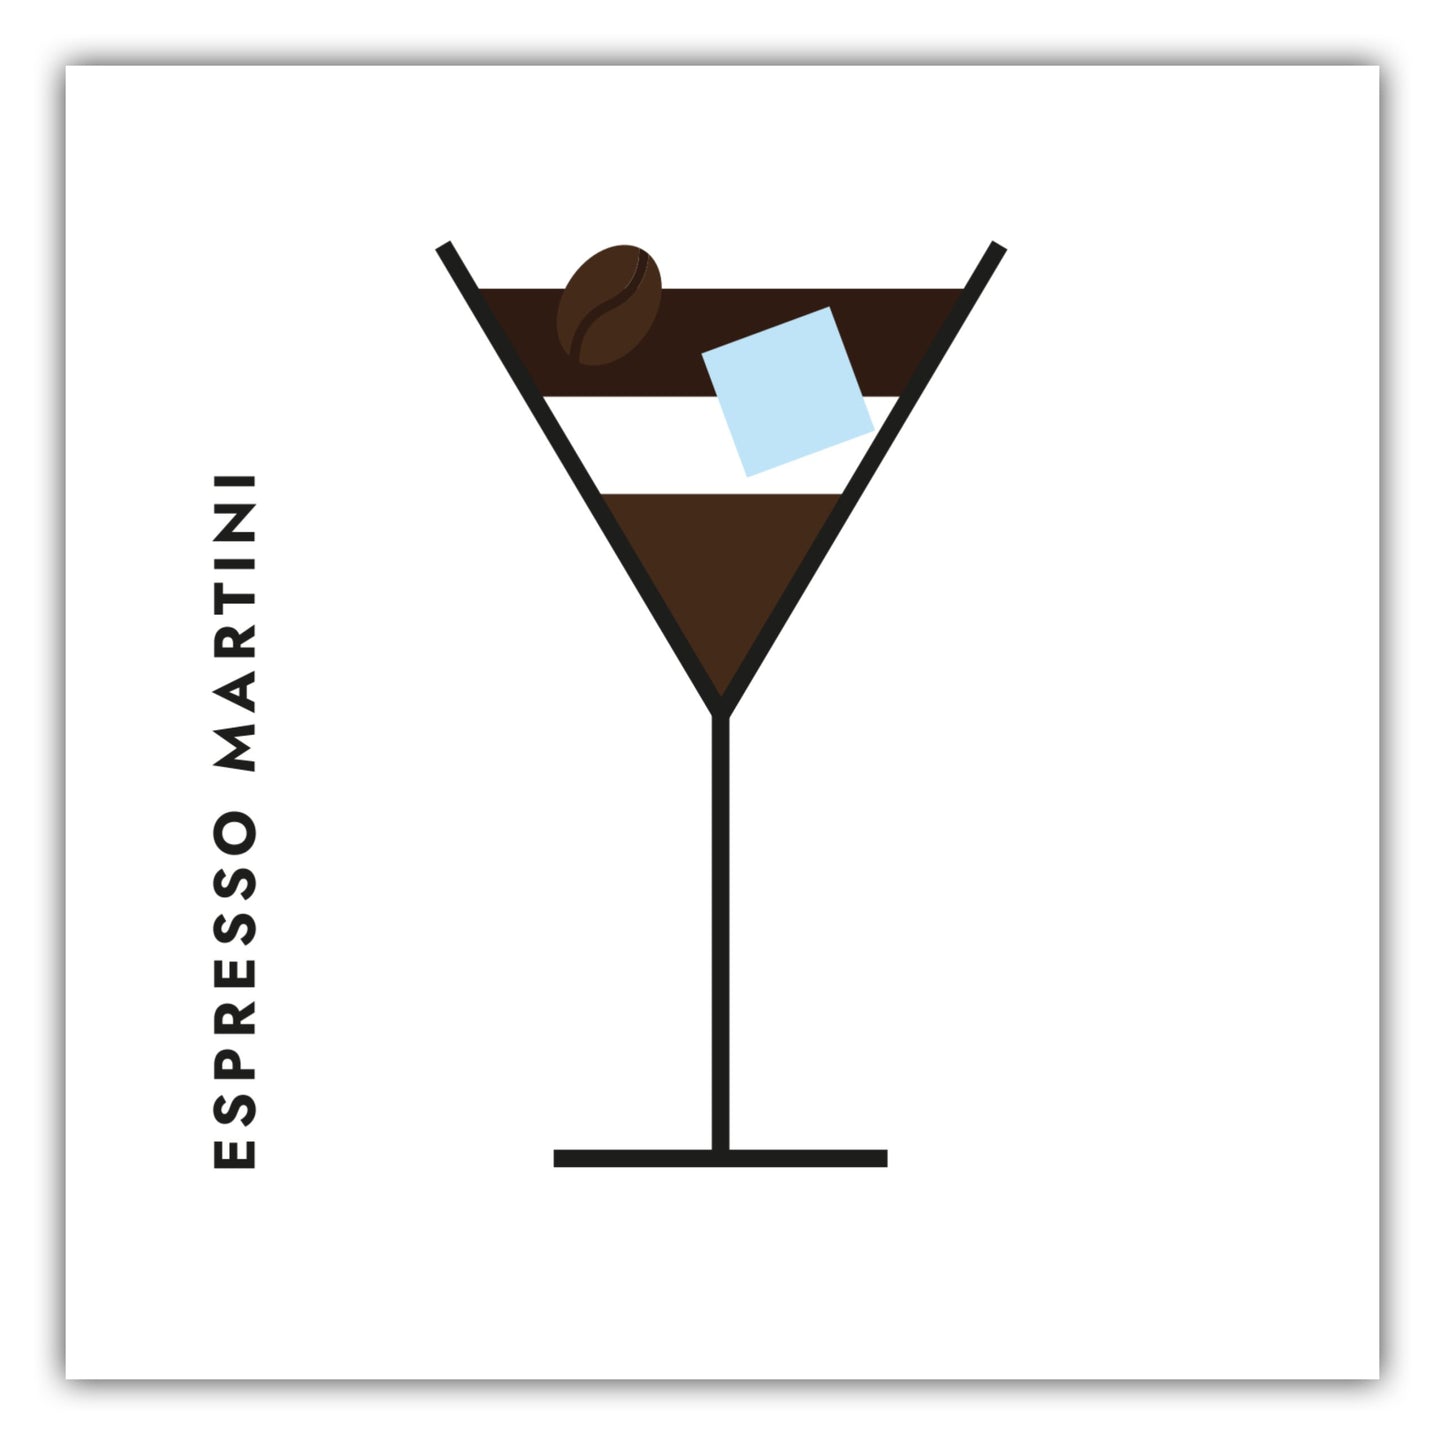 Poster Espresso Martini im Glas (Bauhaus-Style)